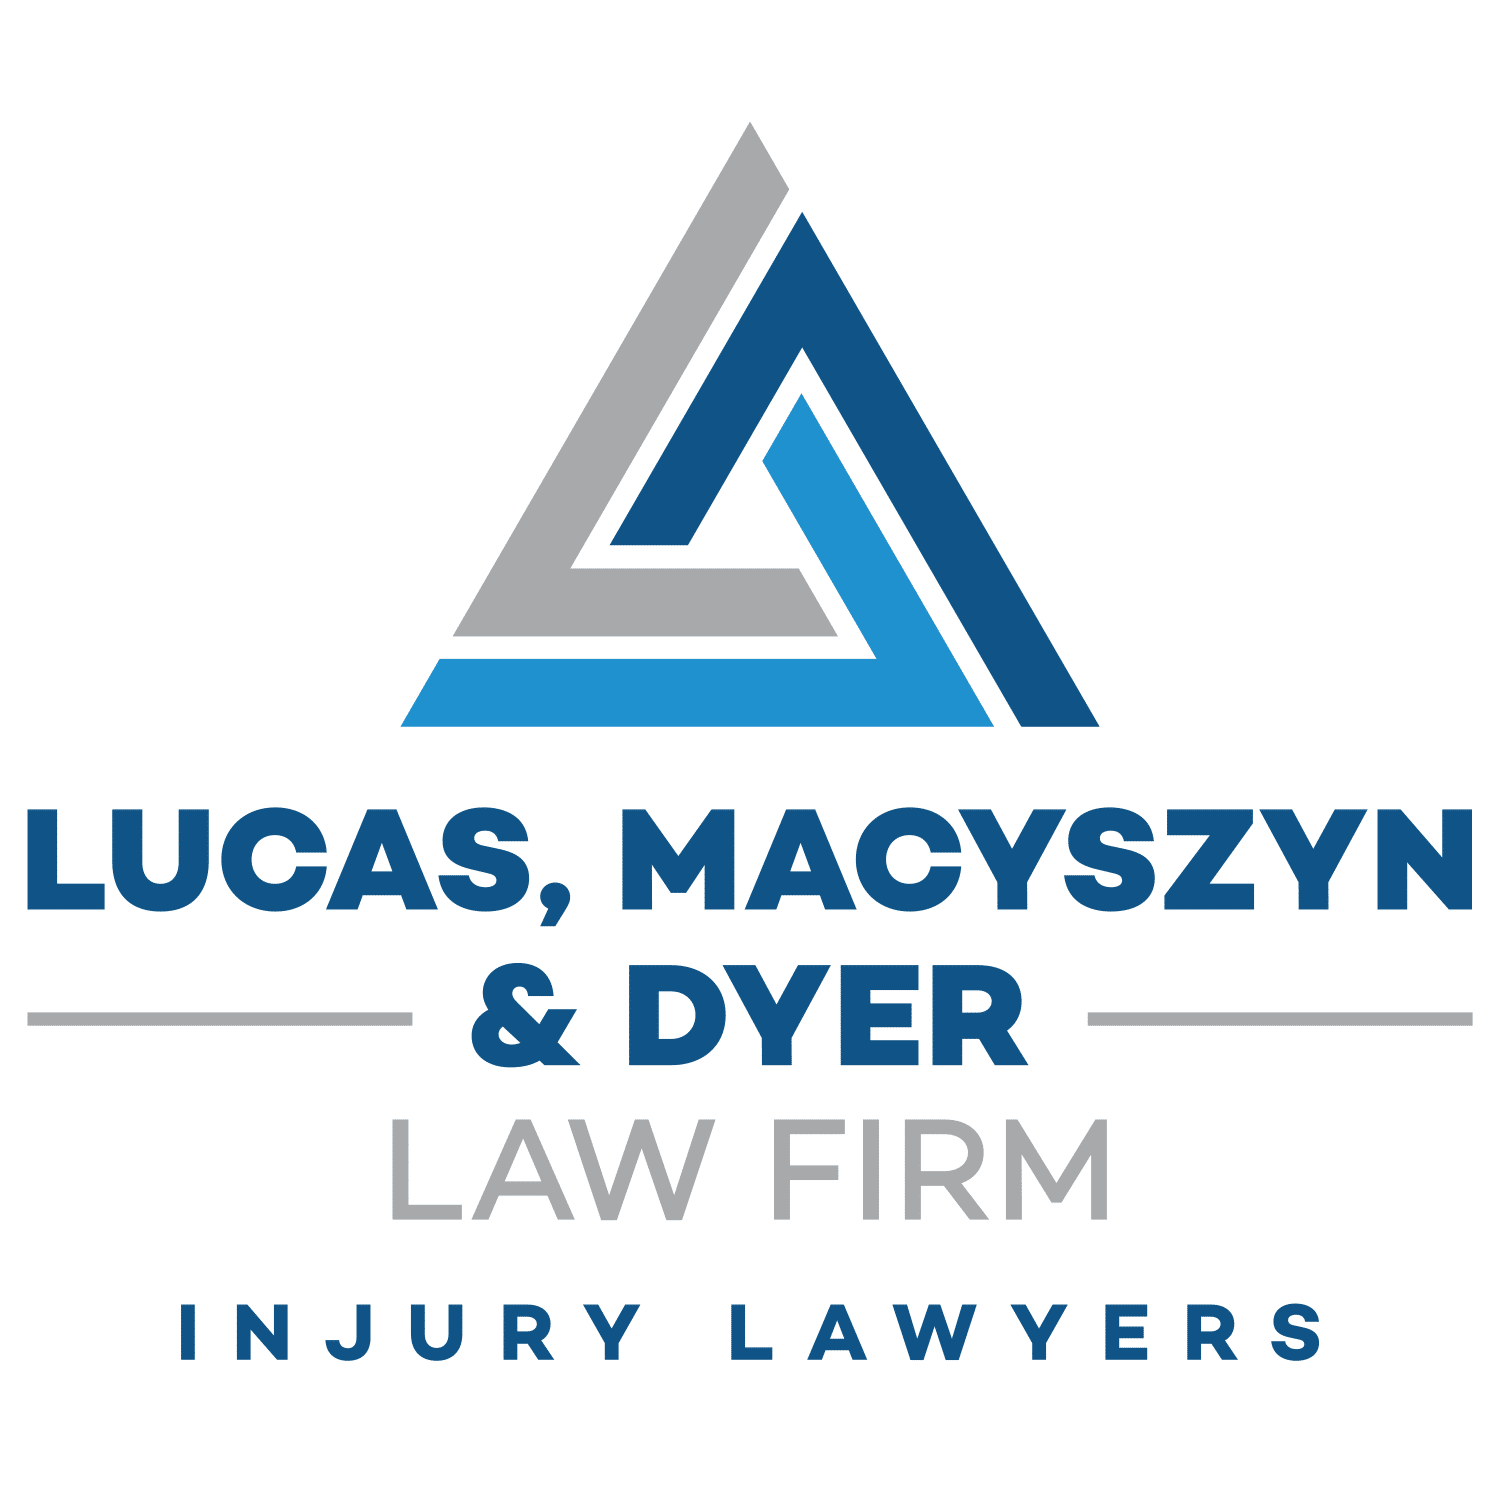 Lucas, Macyszyn & Dyer Law Firm Injury Lawyers